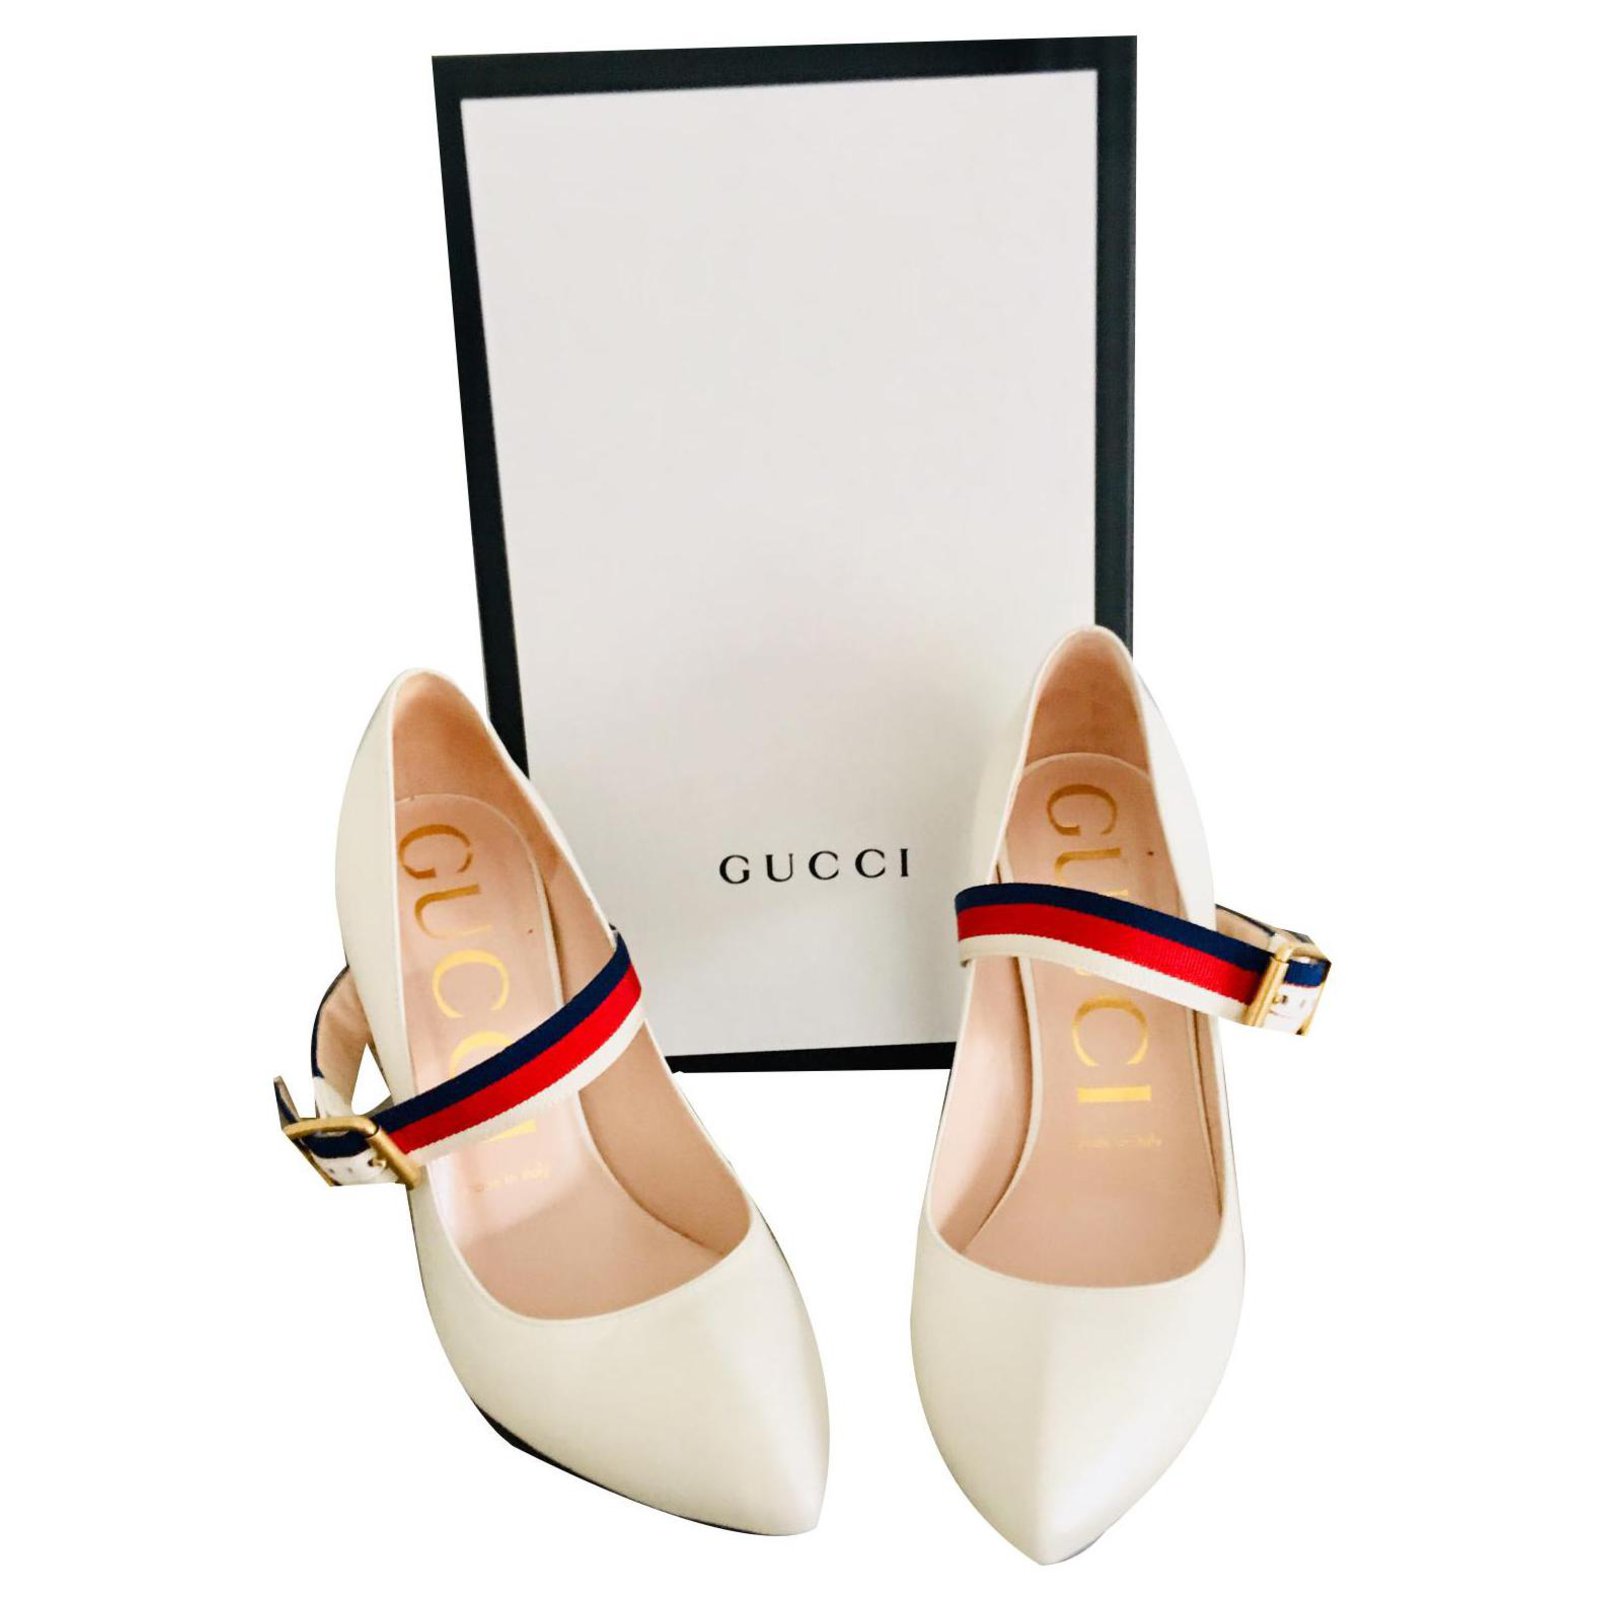 Gucci Sylvie Leather Pumps Heels 